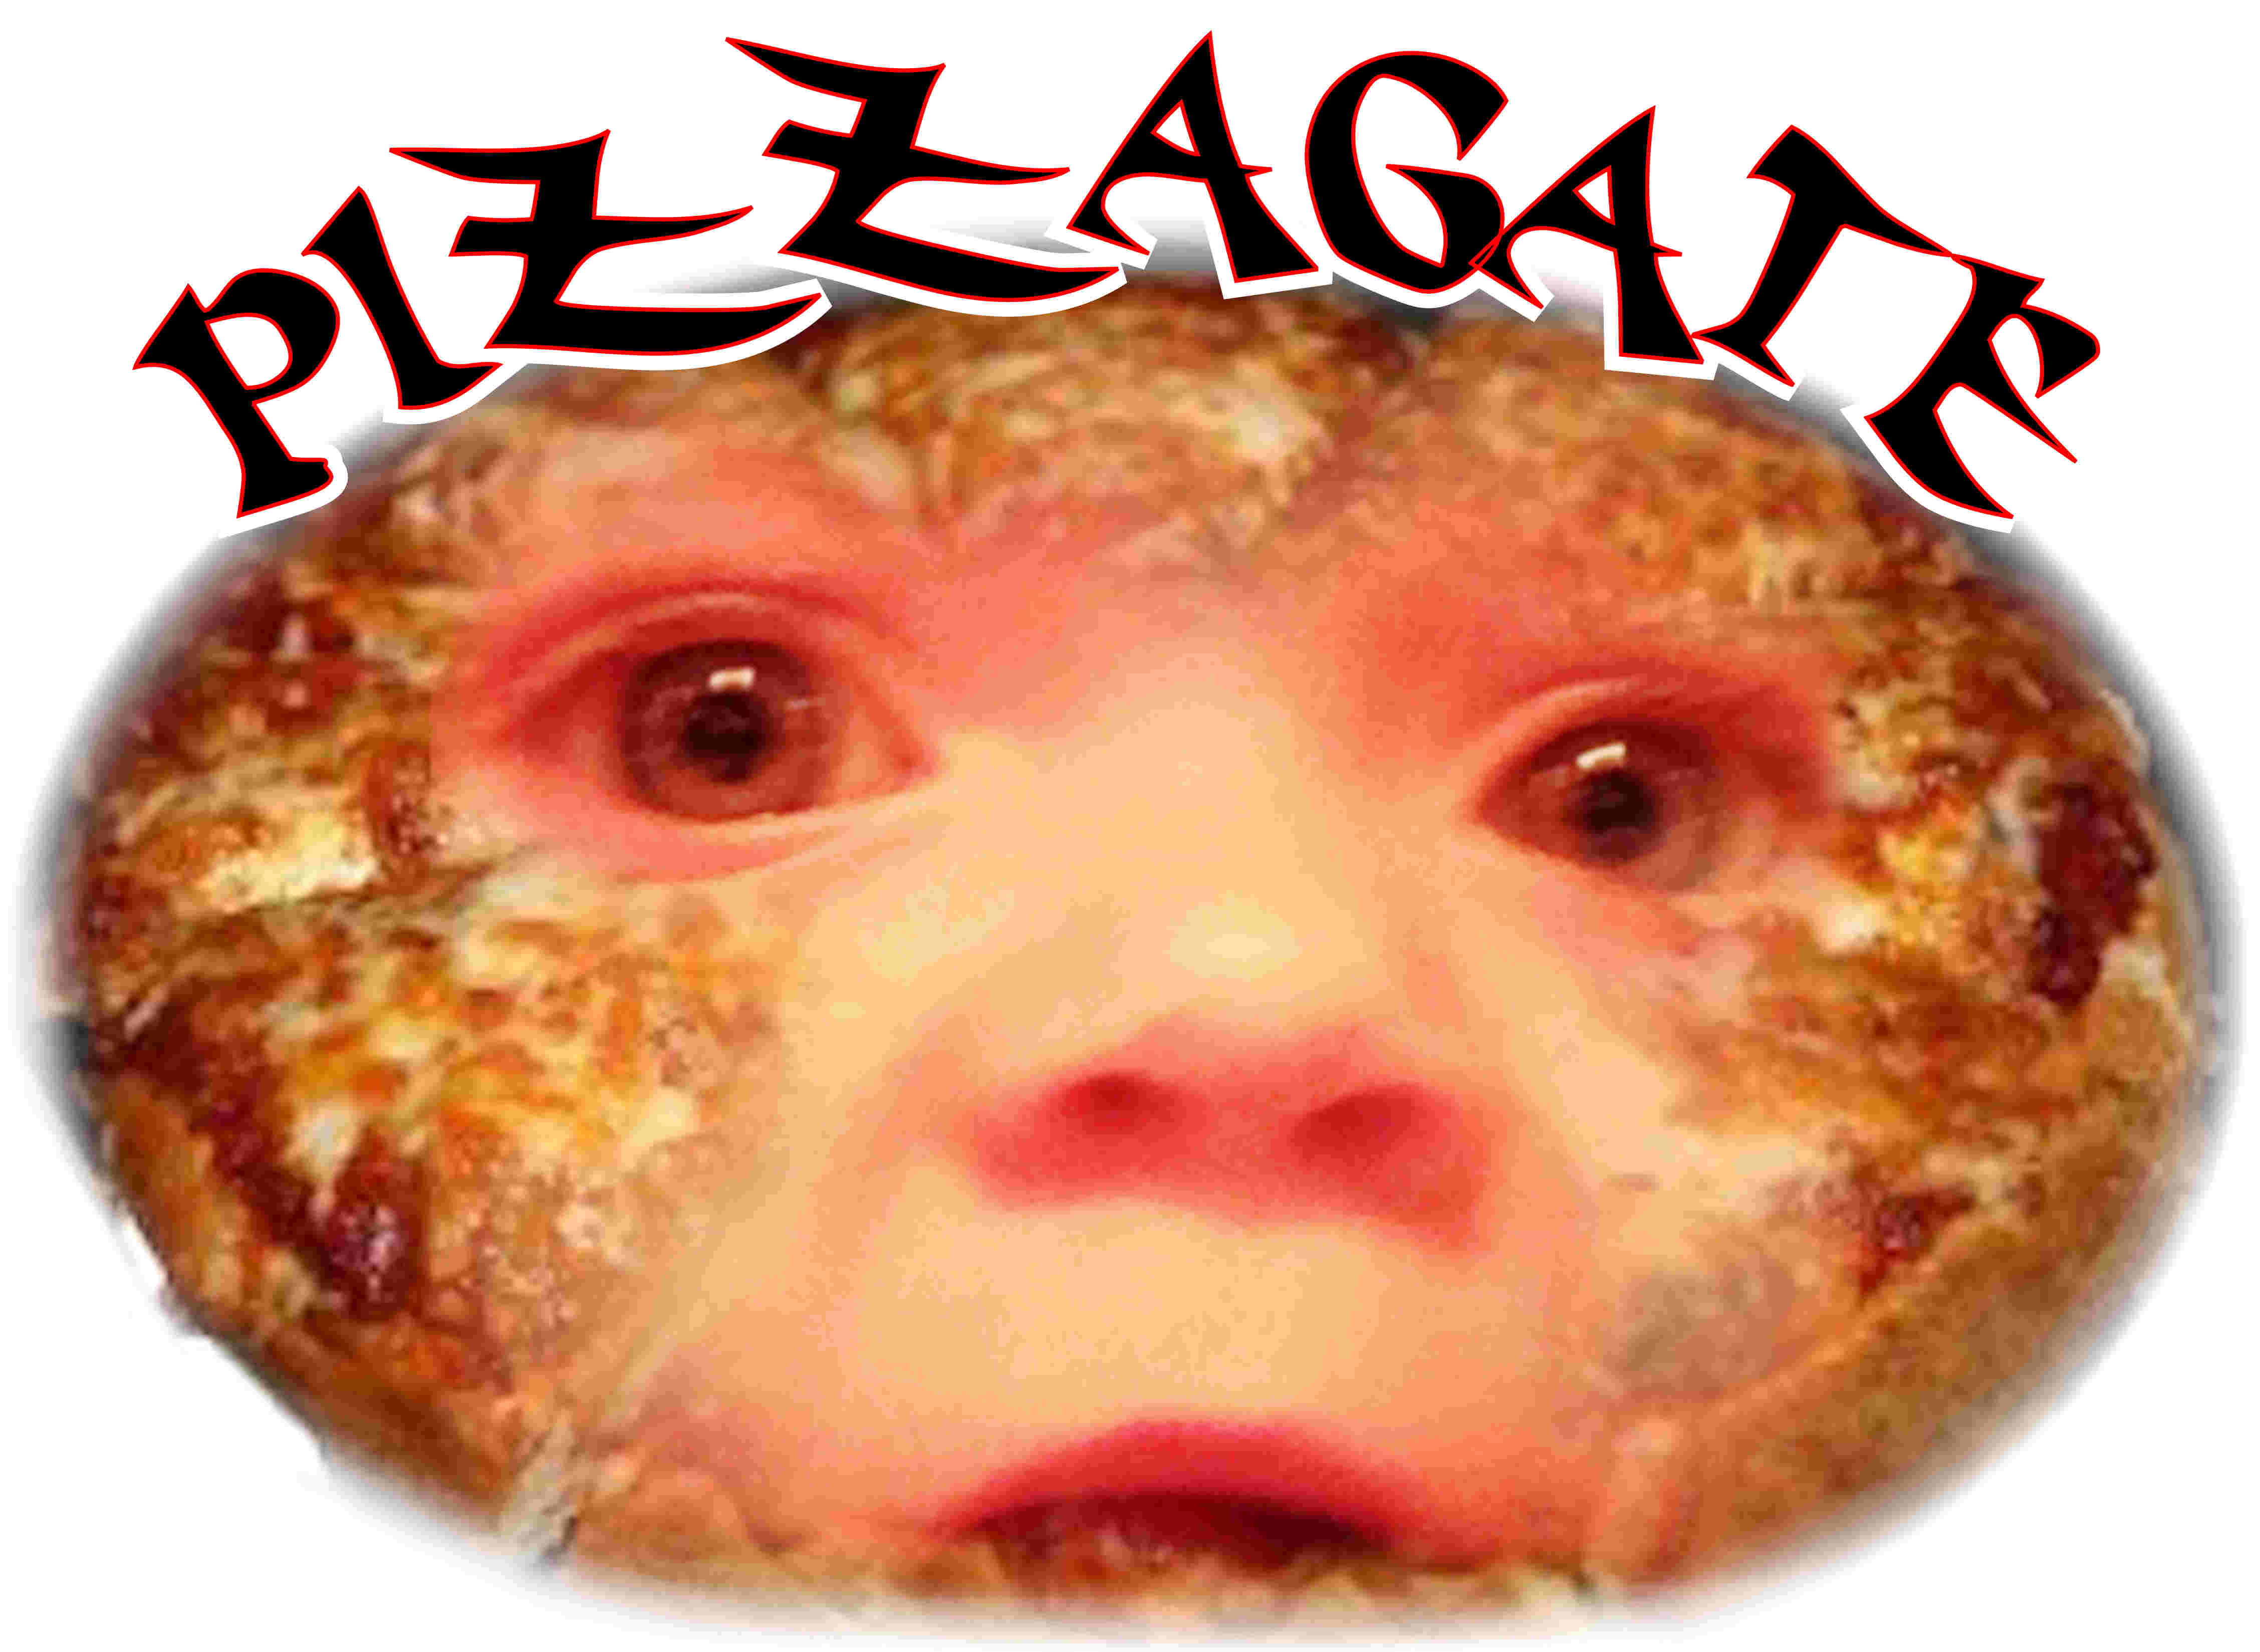 Pizzagate 3.jpg